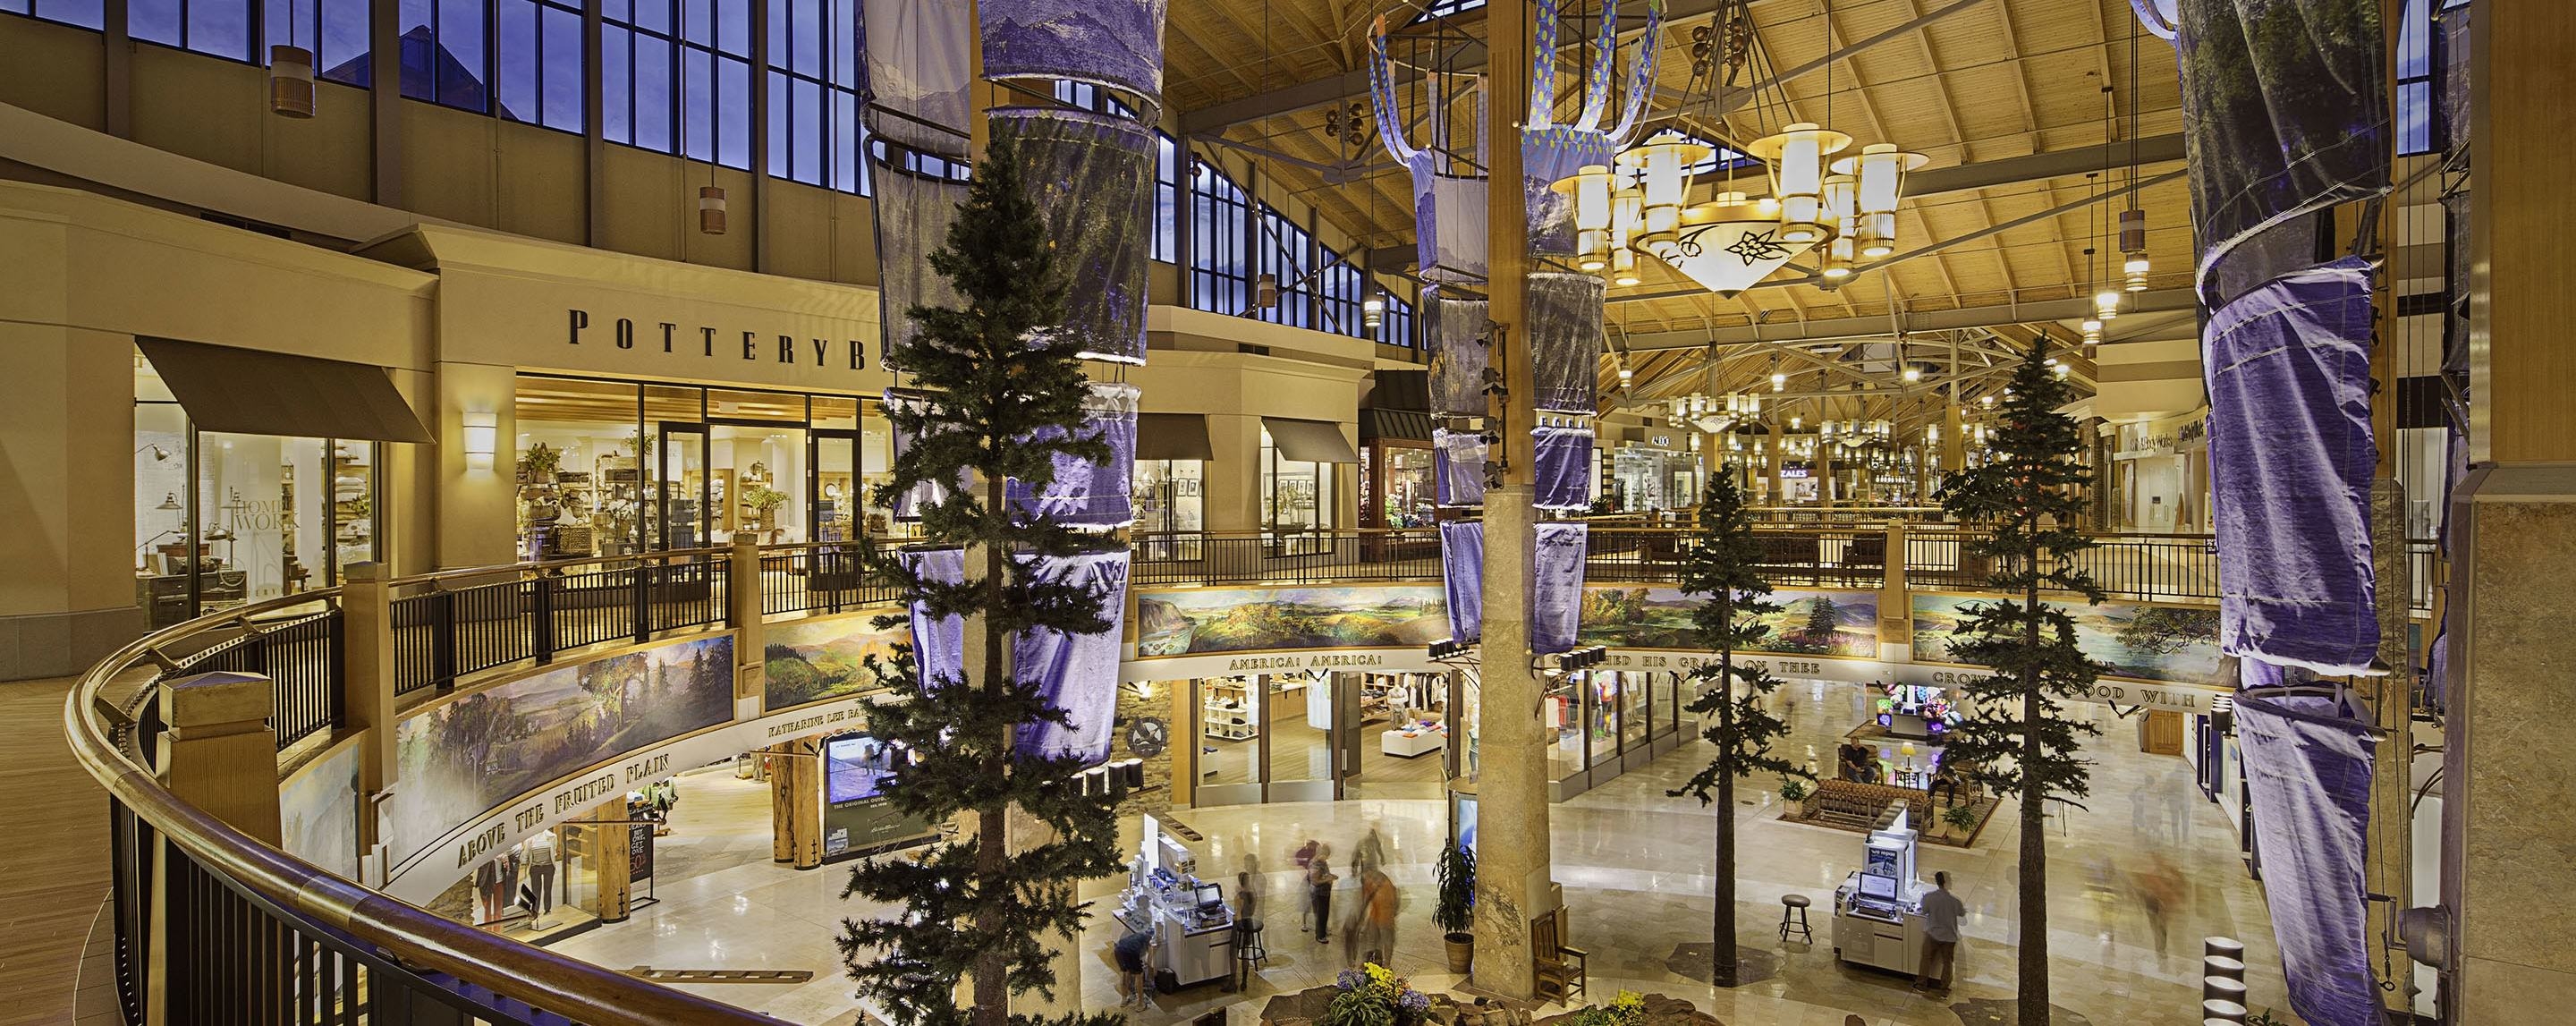 Park Meadows Mall in Denver Colorado 🏔️ With the DJI mini 3 pro 🚁 